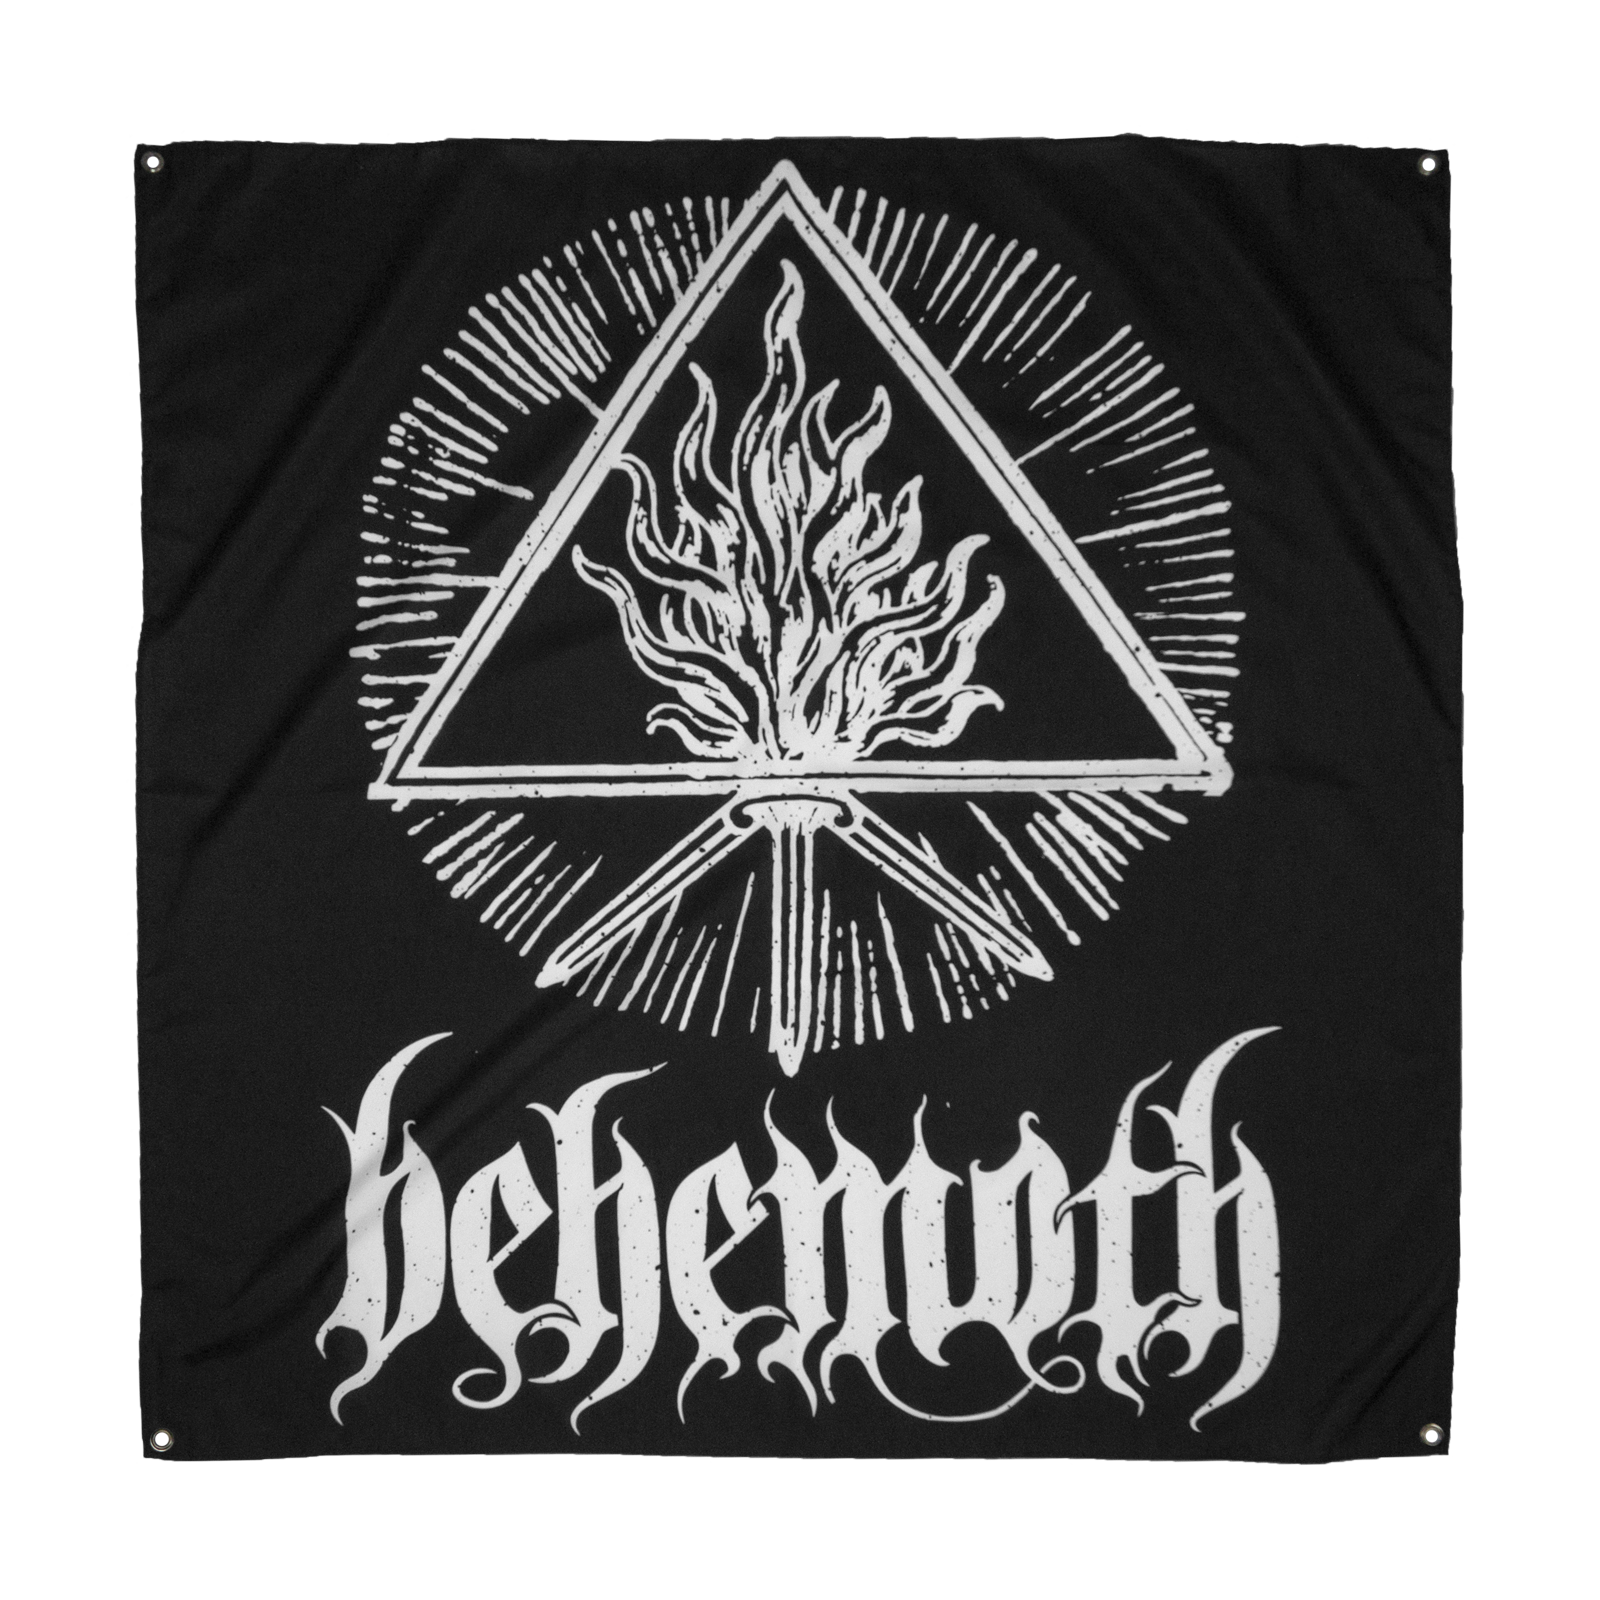 behemoth logo png